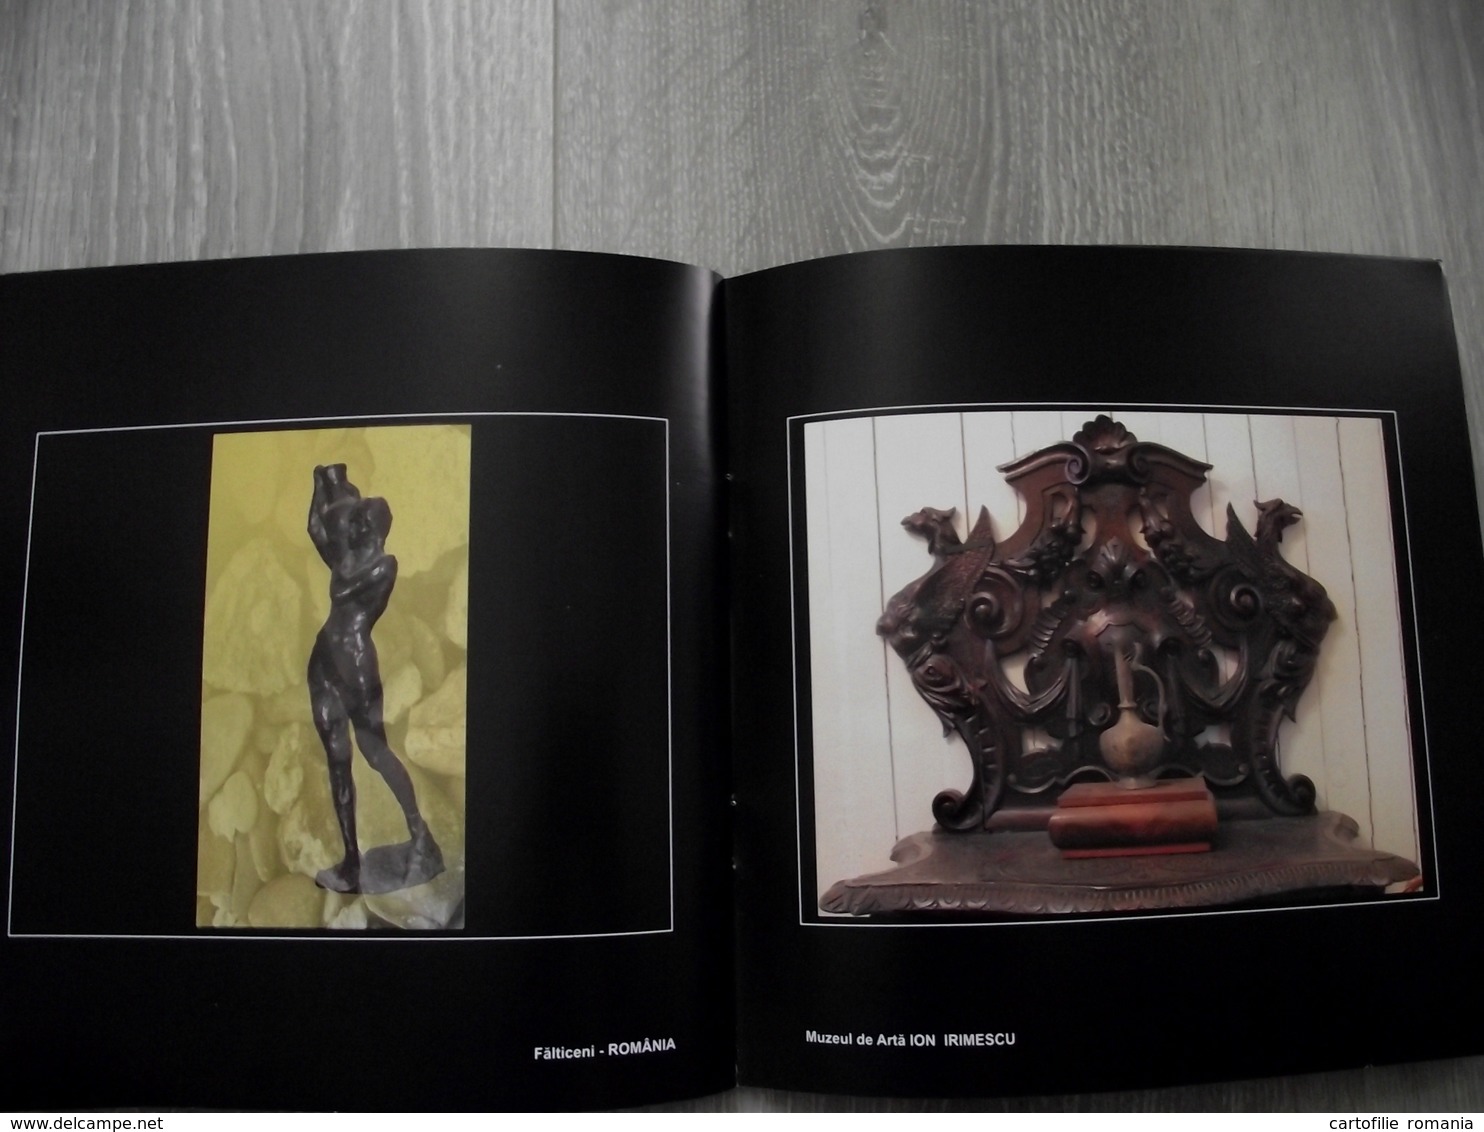 Romania - Suceava Falticeni - Art album - Illustrated - Sculptures - Ion Irimescu, 33 pages glossy quality paper